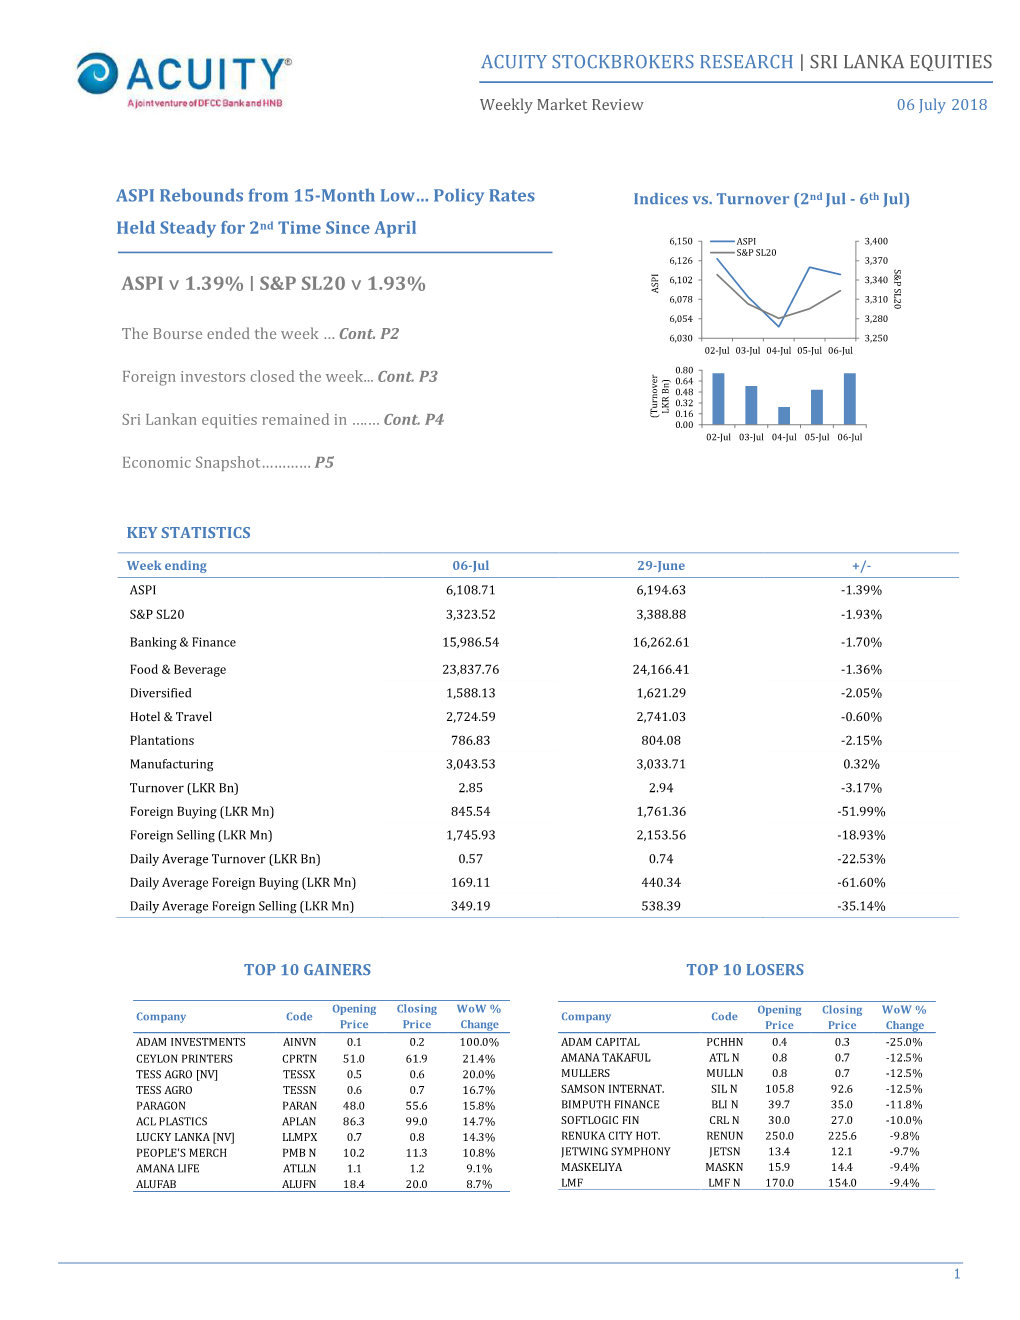 Sri Lanka Equities Aspi ˅ 1.39% | S&P Sl20 ˅ 1.93%